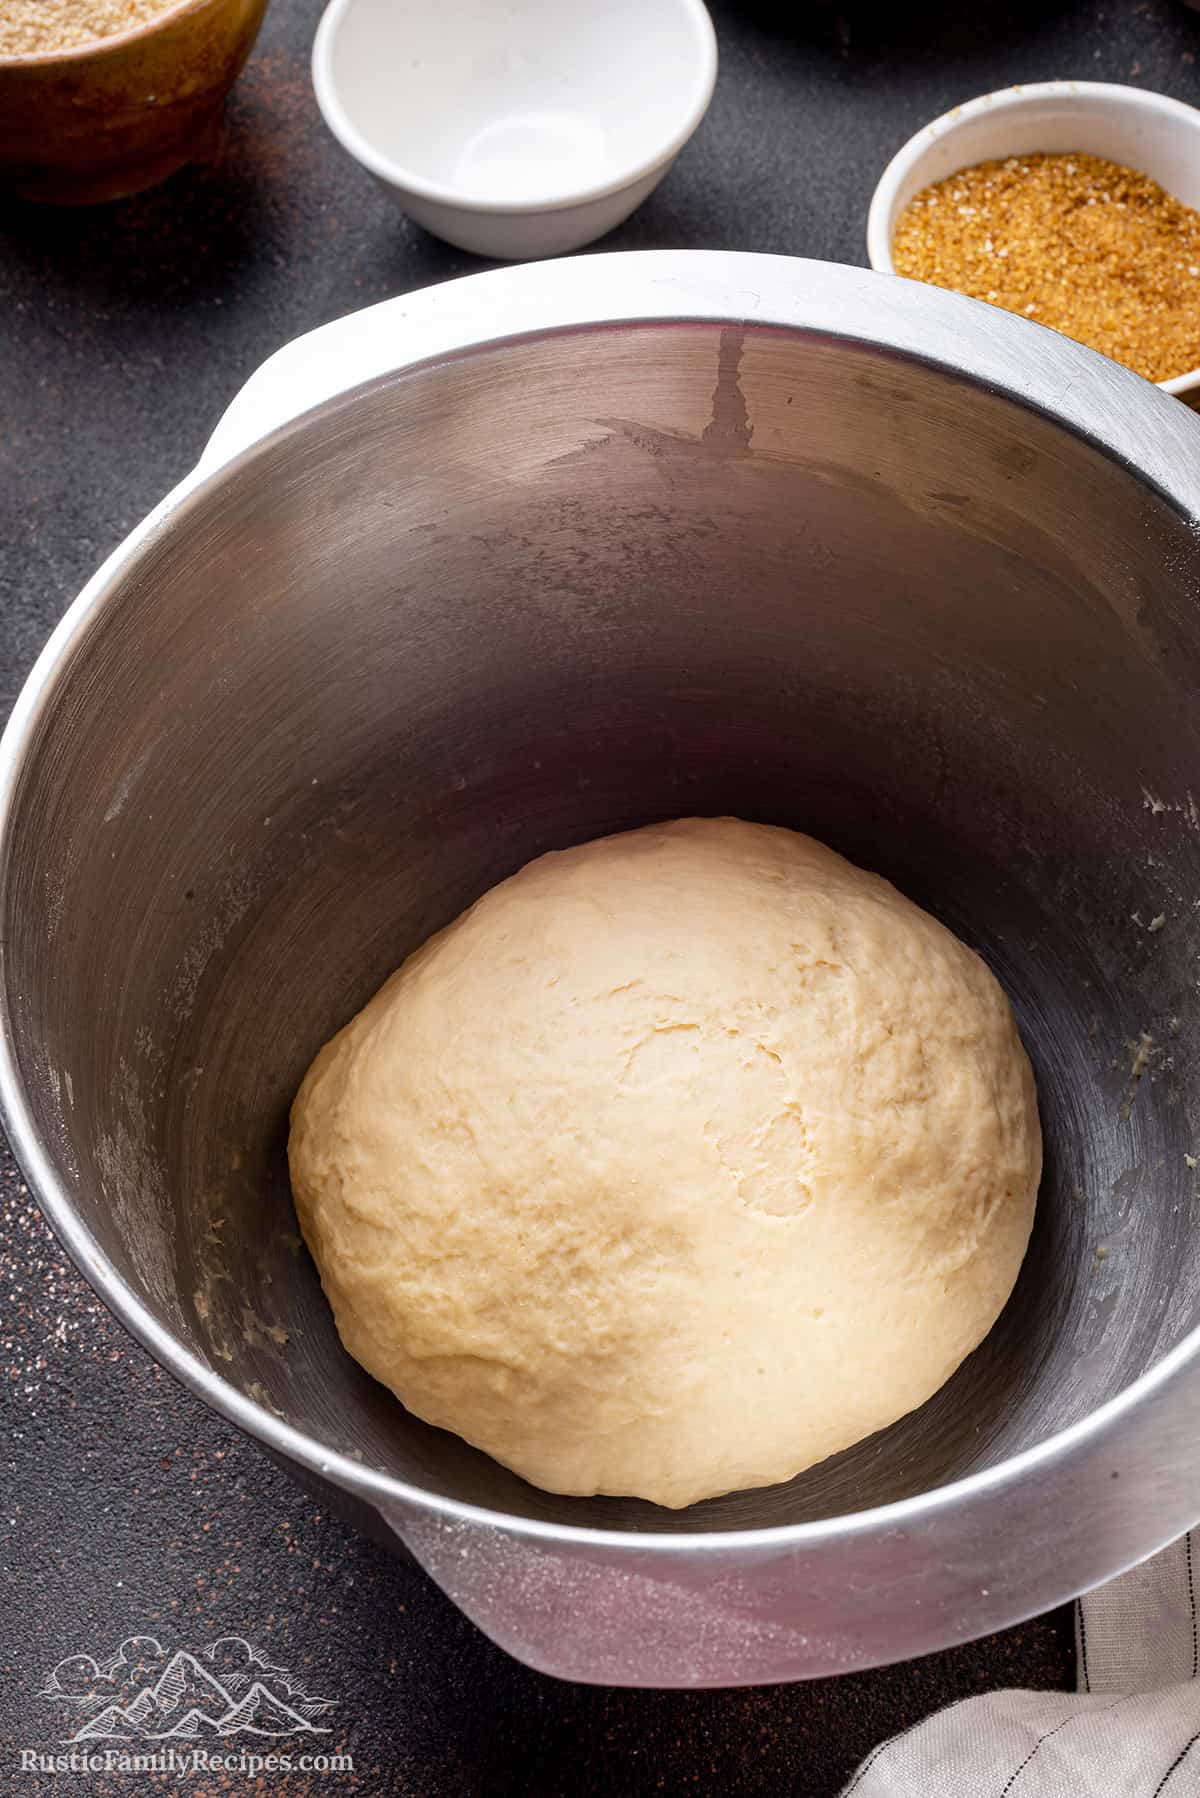 Senorita dough in a mixer bowl getting ready to rise